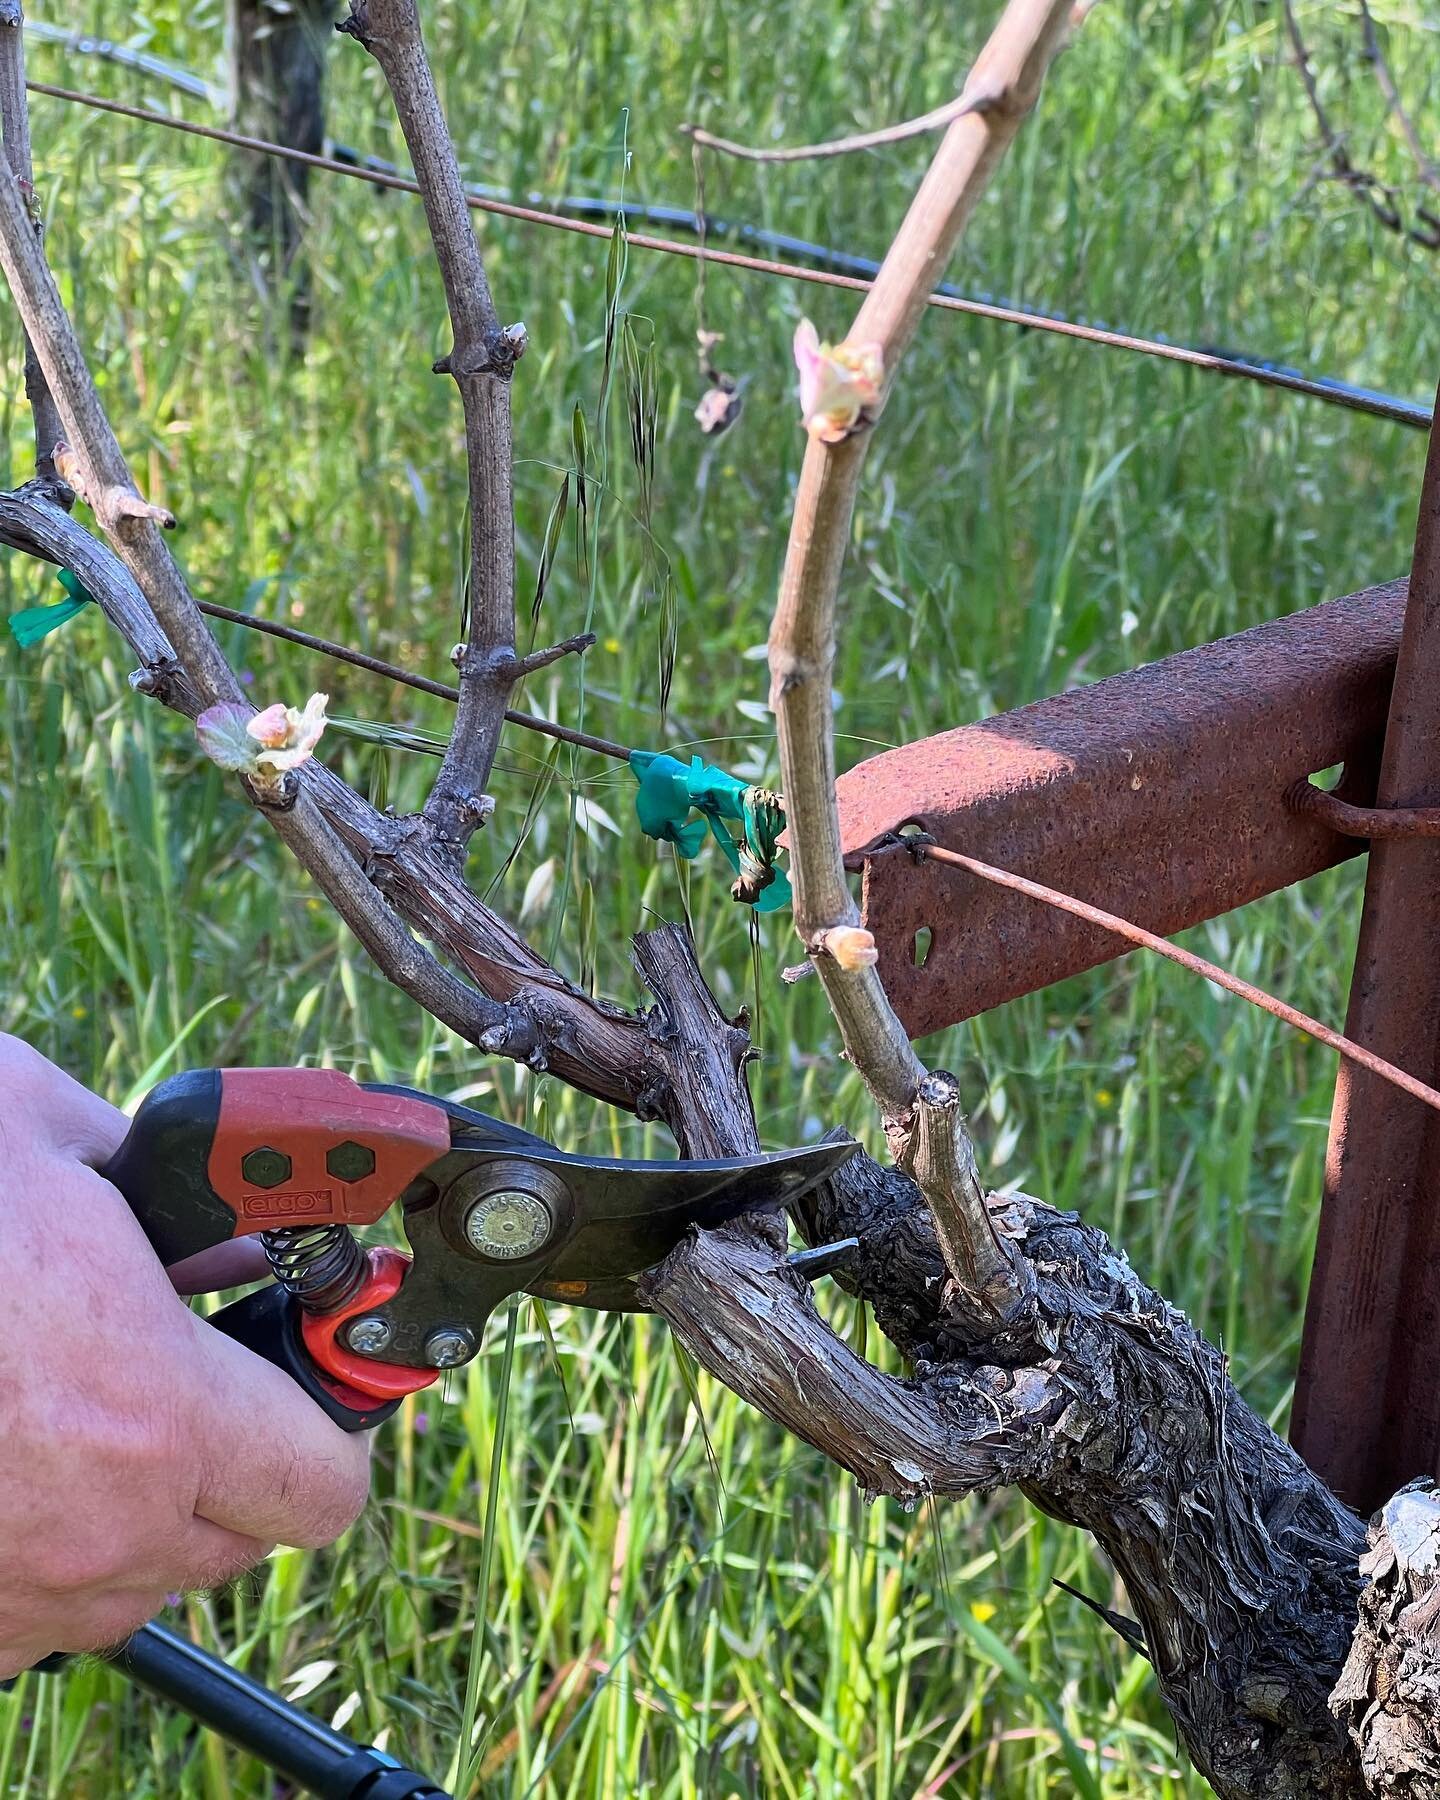 Finishing up pruning ✂️
&bull;
&bull;
&bull;

#napavalley #napa #winecountry #sthelena #rustonfamilyvineyards #wine #winelover #vineyard